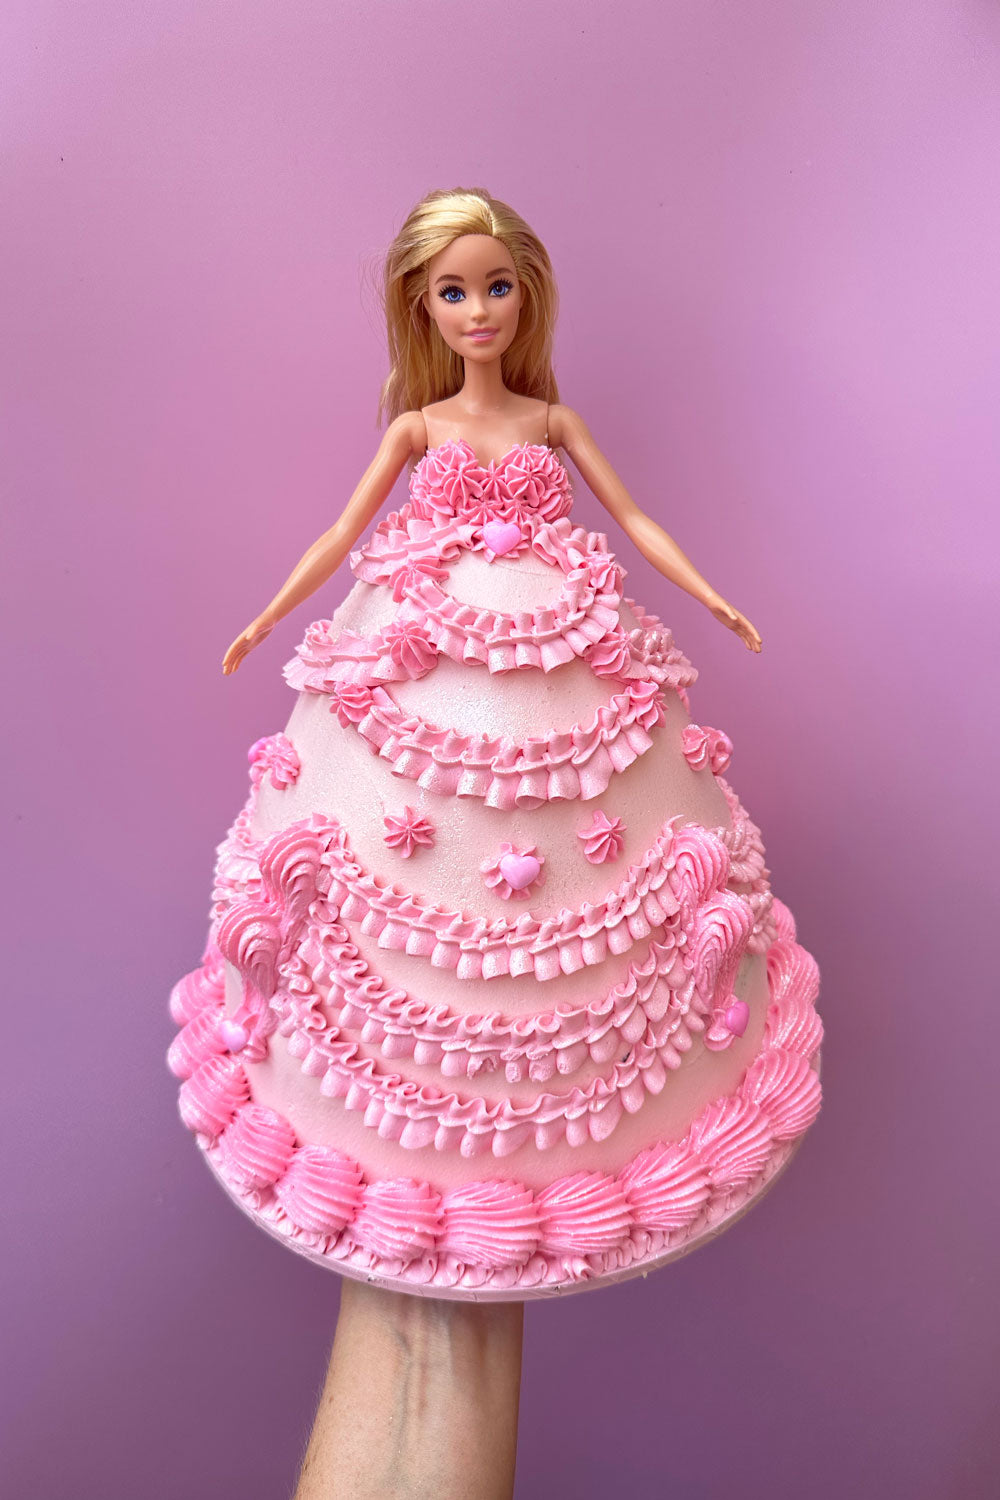 Cool Blue Barbie Cake- Order Online Cool Blue Barbie Cake @ Flavoursguru